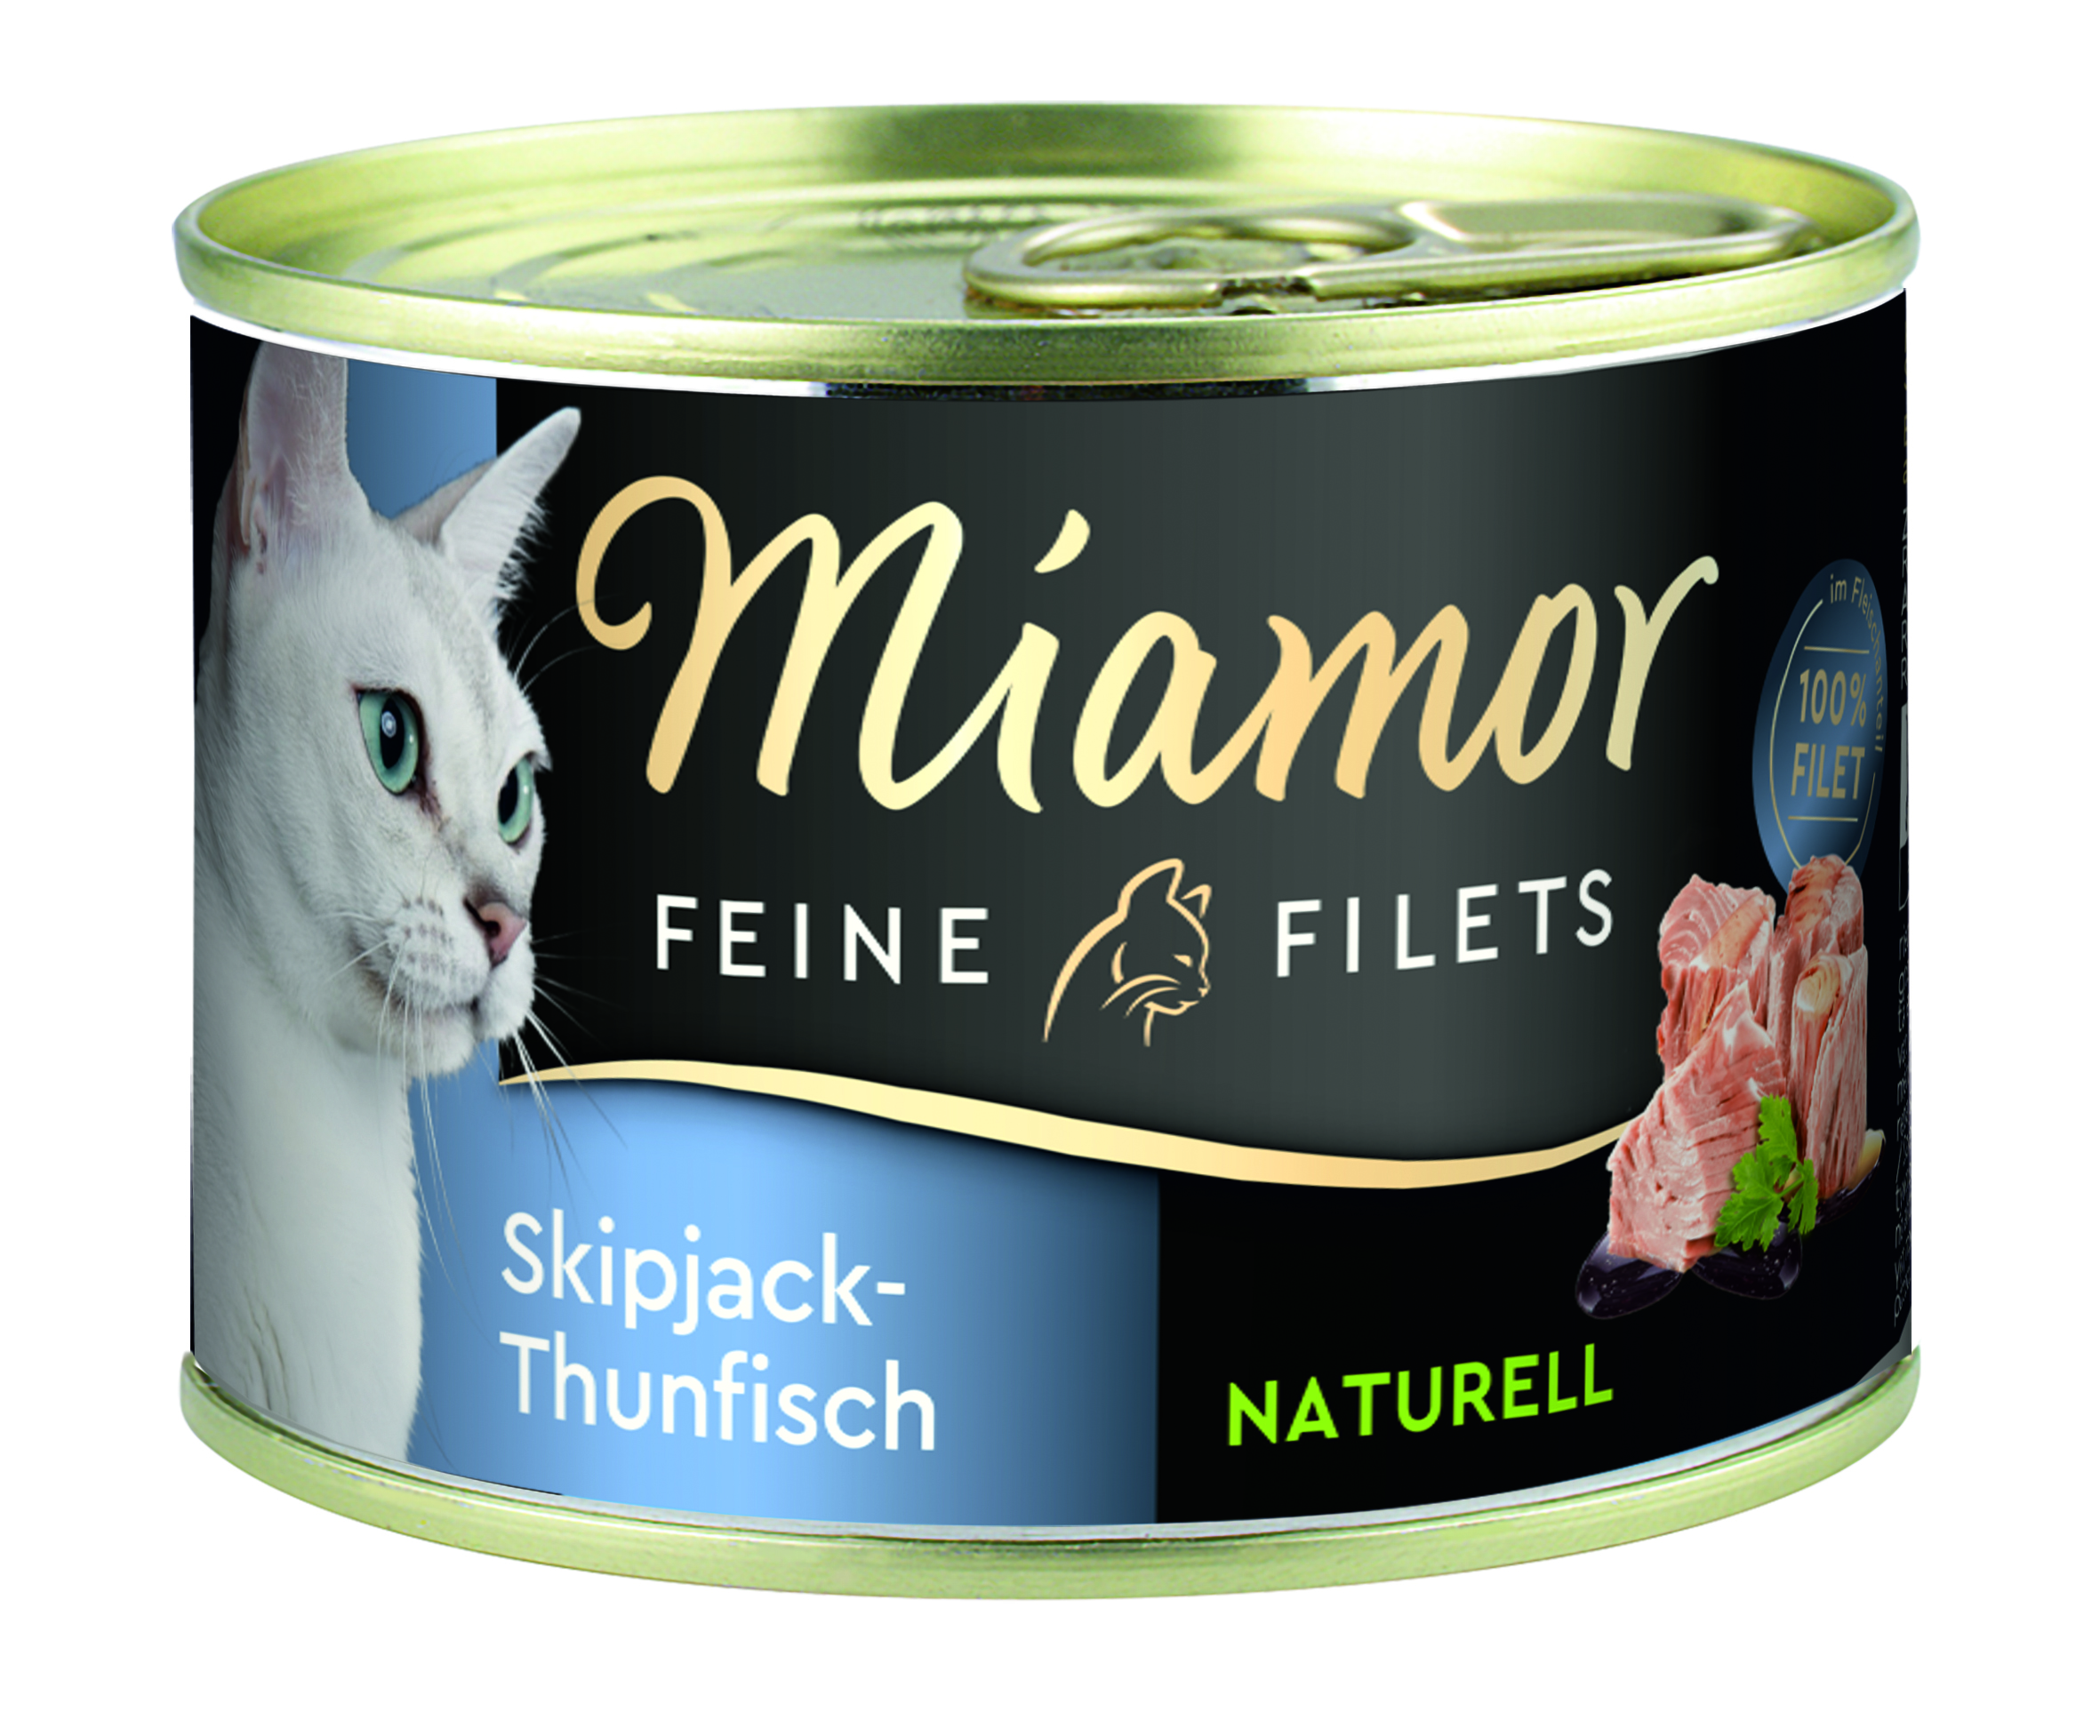 Miamor Feine Filets Naturell Skipjack-Thunfisch 156g Dose